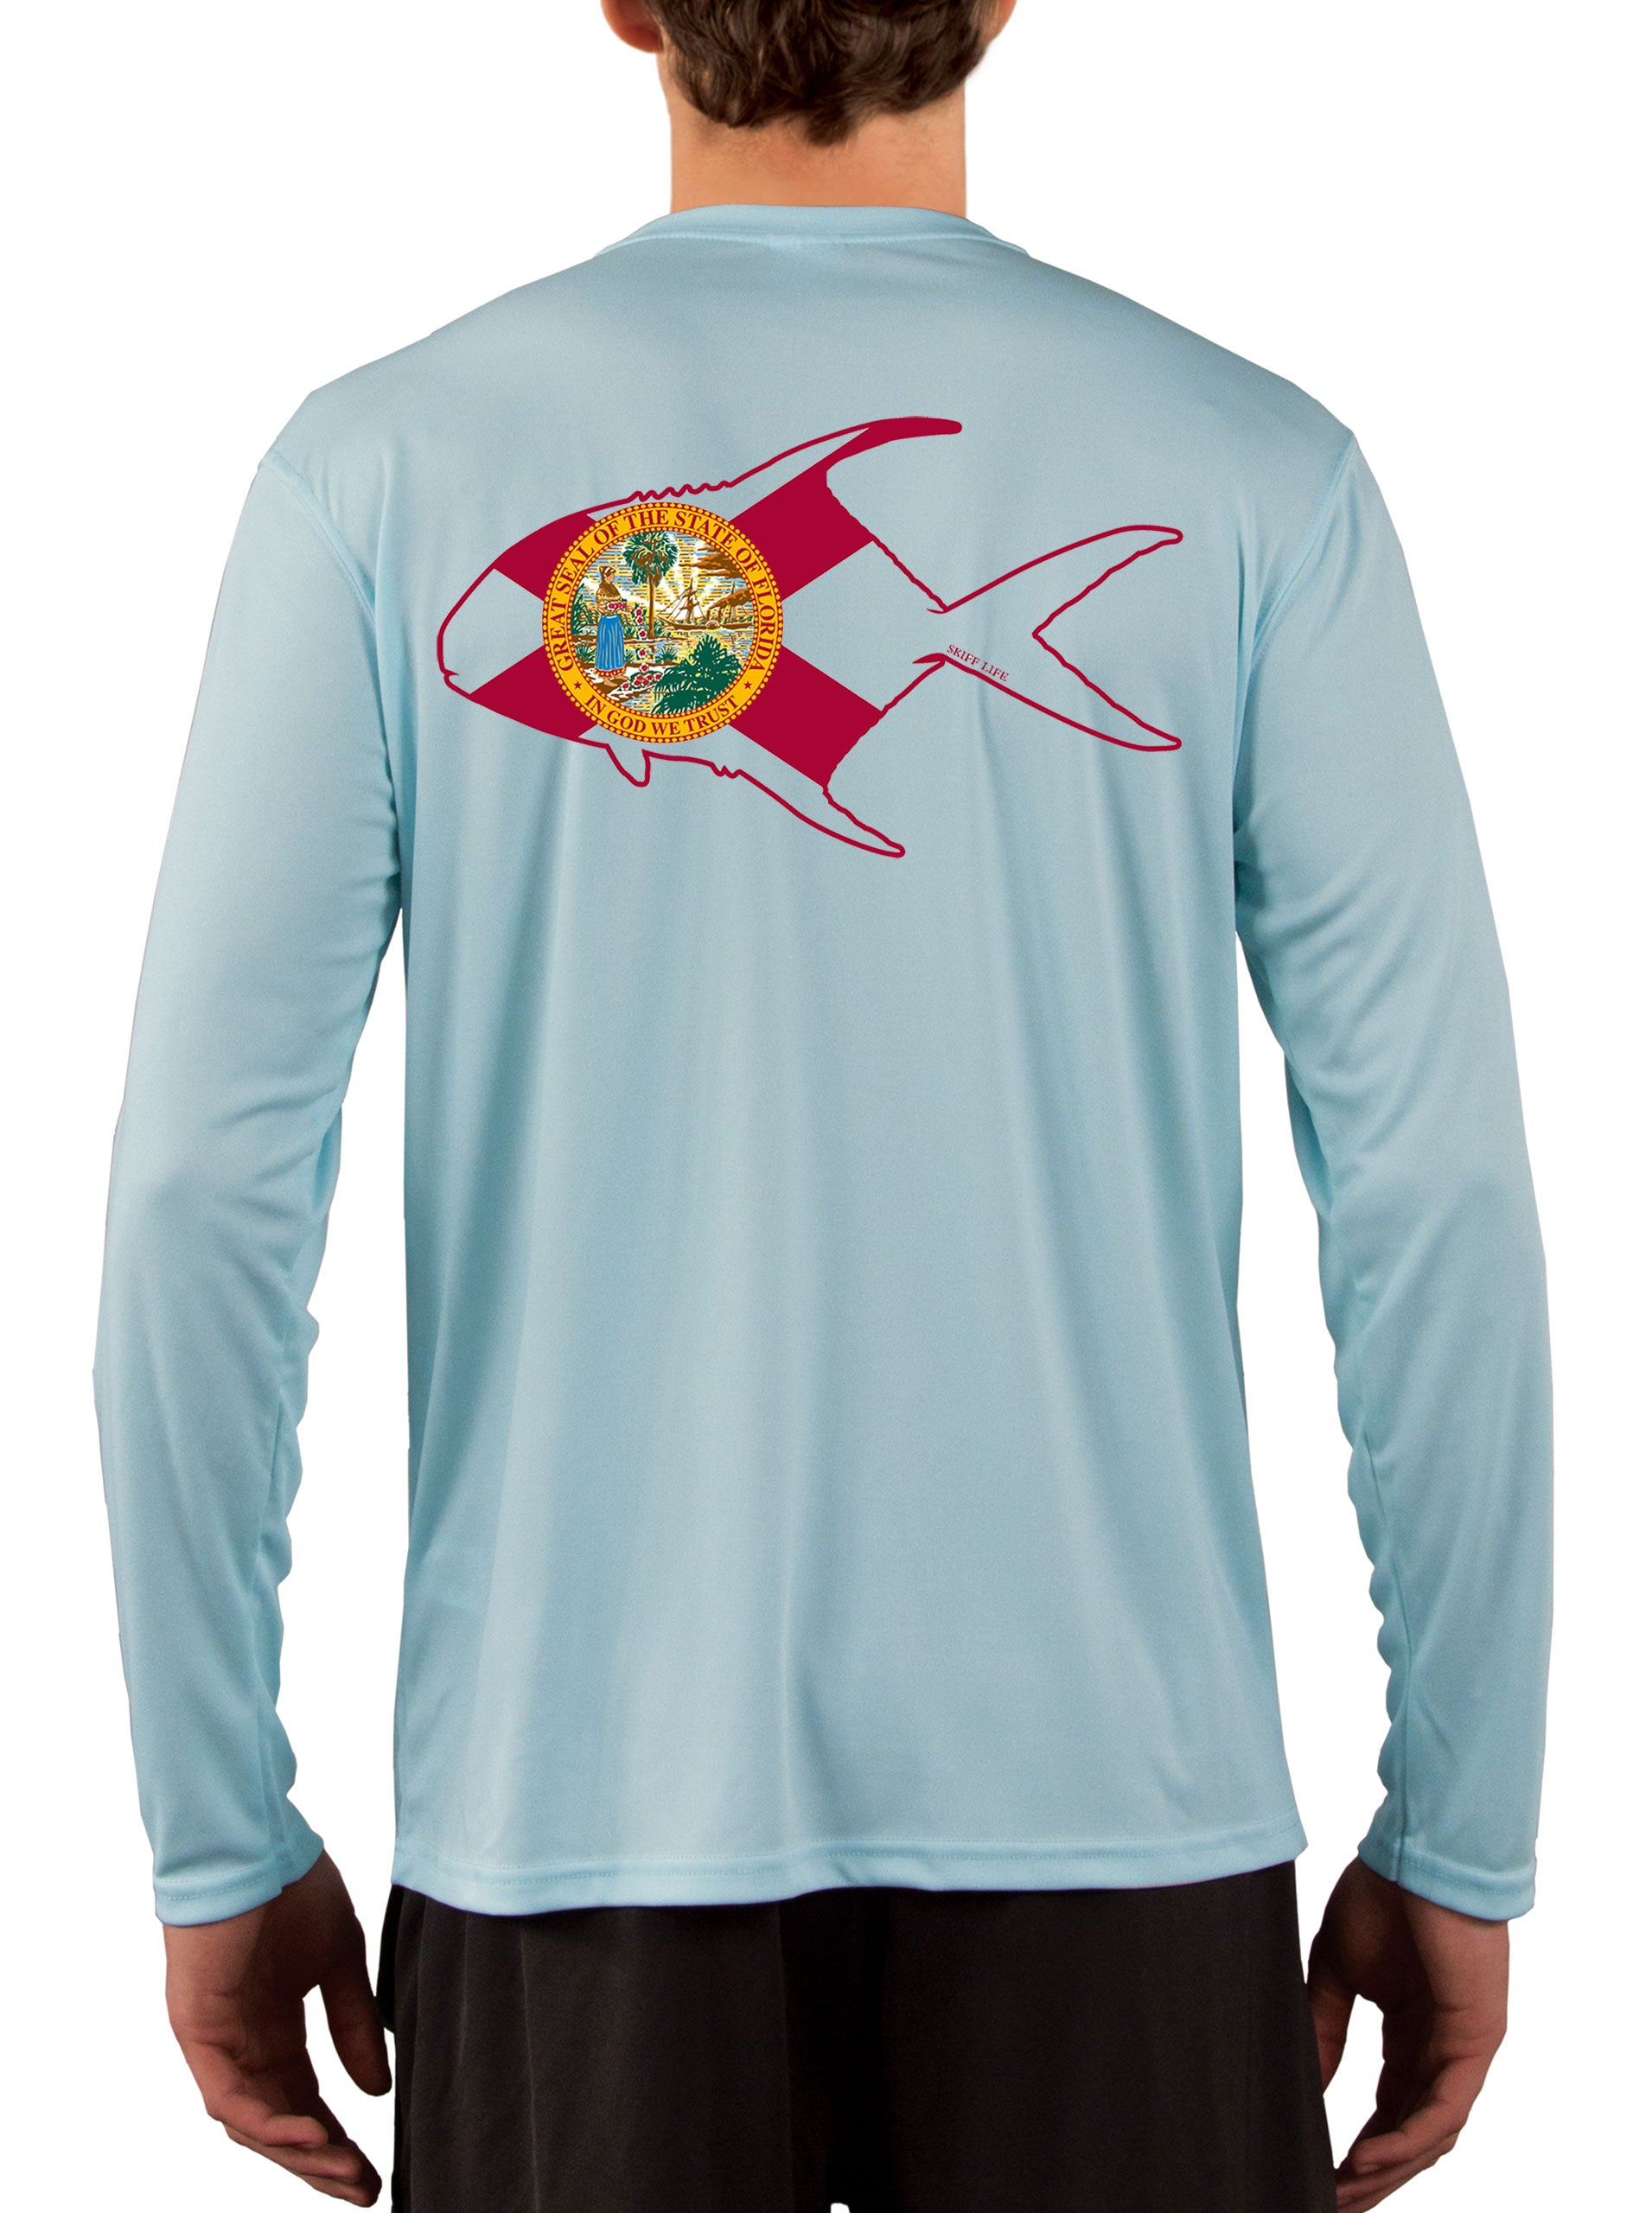 Florida State Flag Permit Florida Keys Fishing Shirts For Men